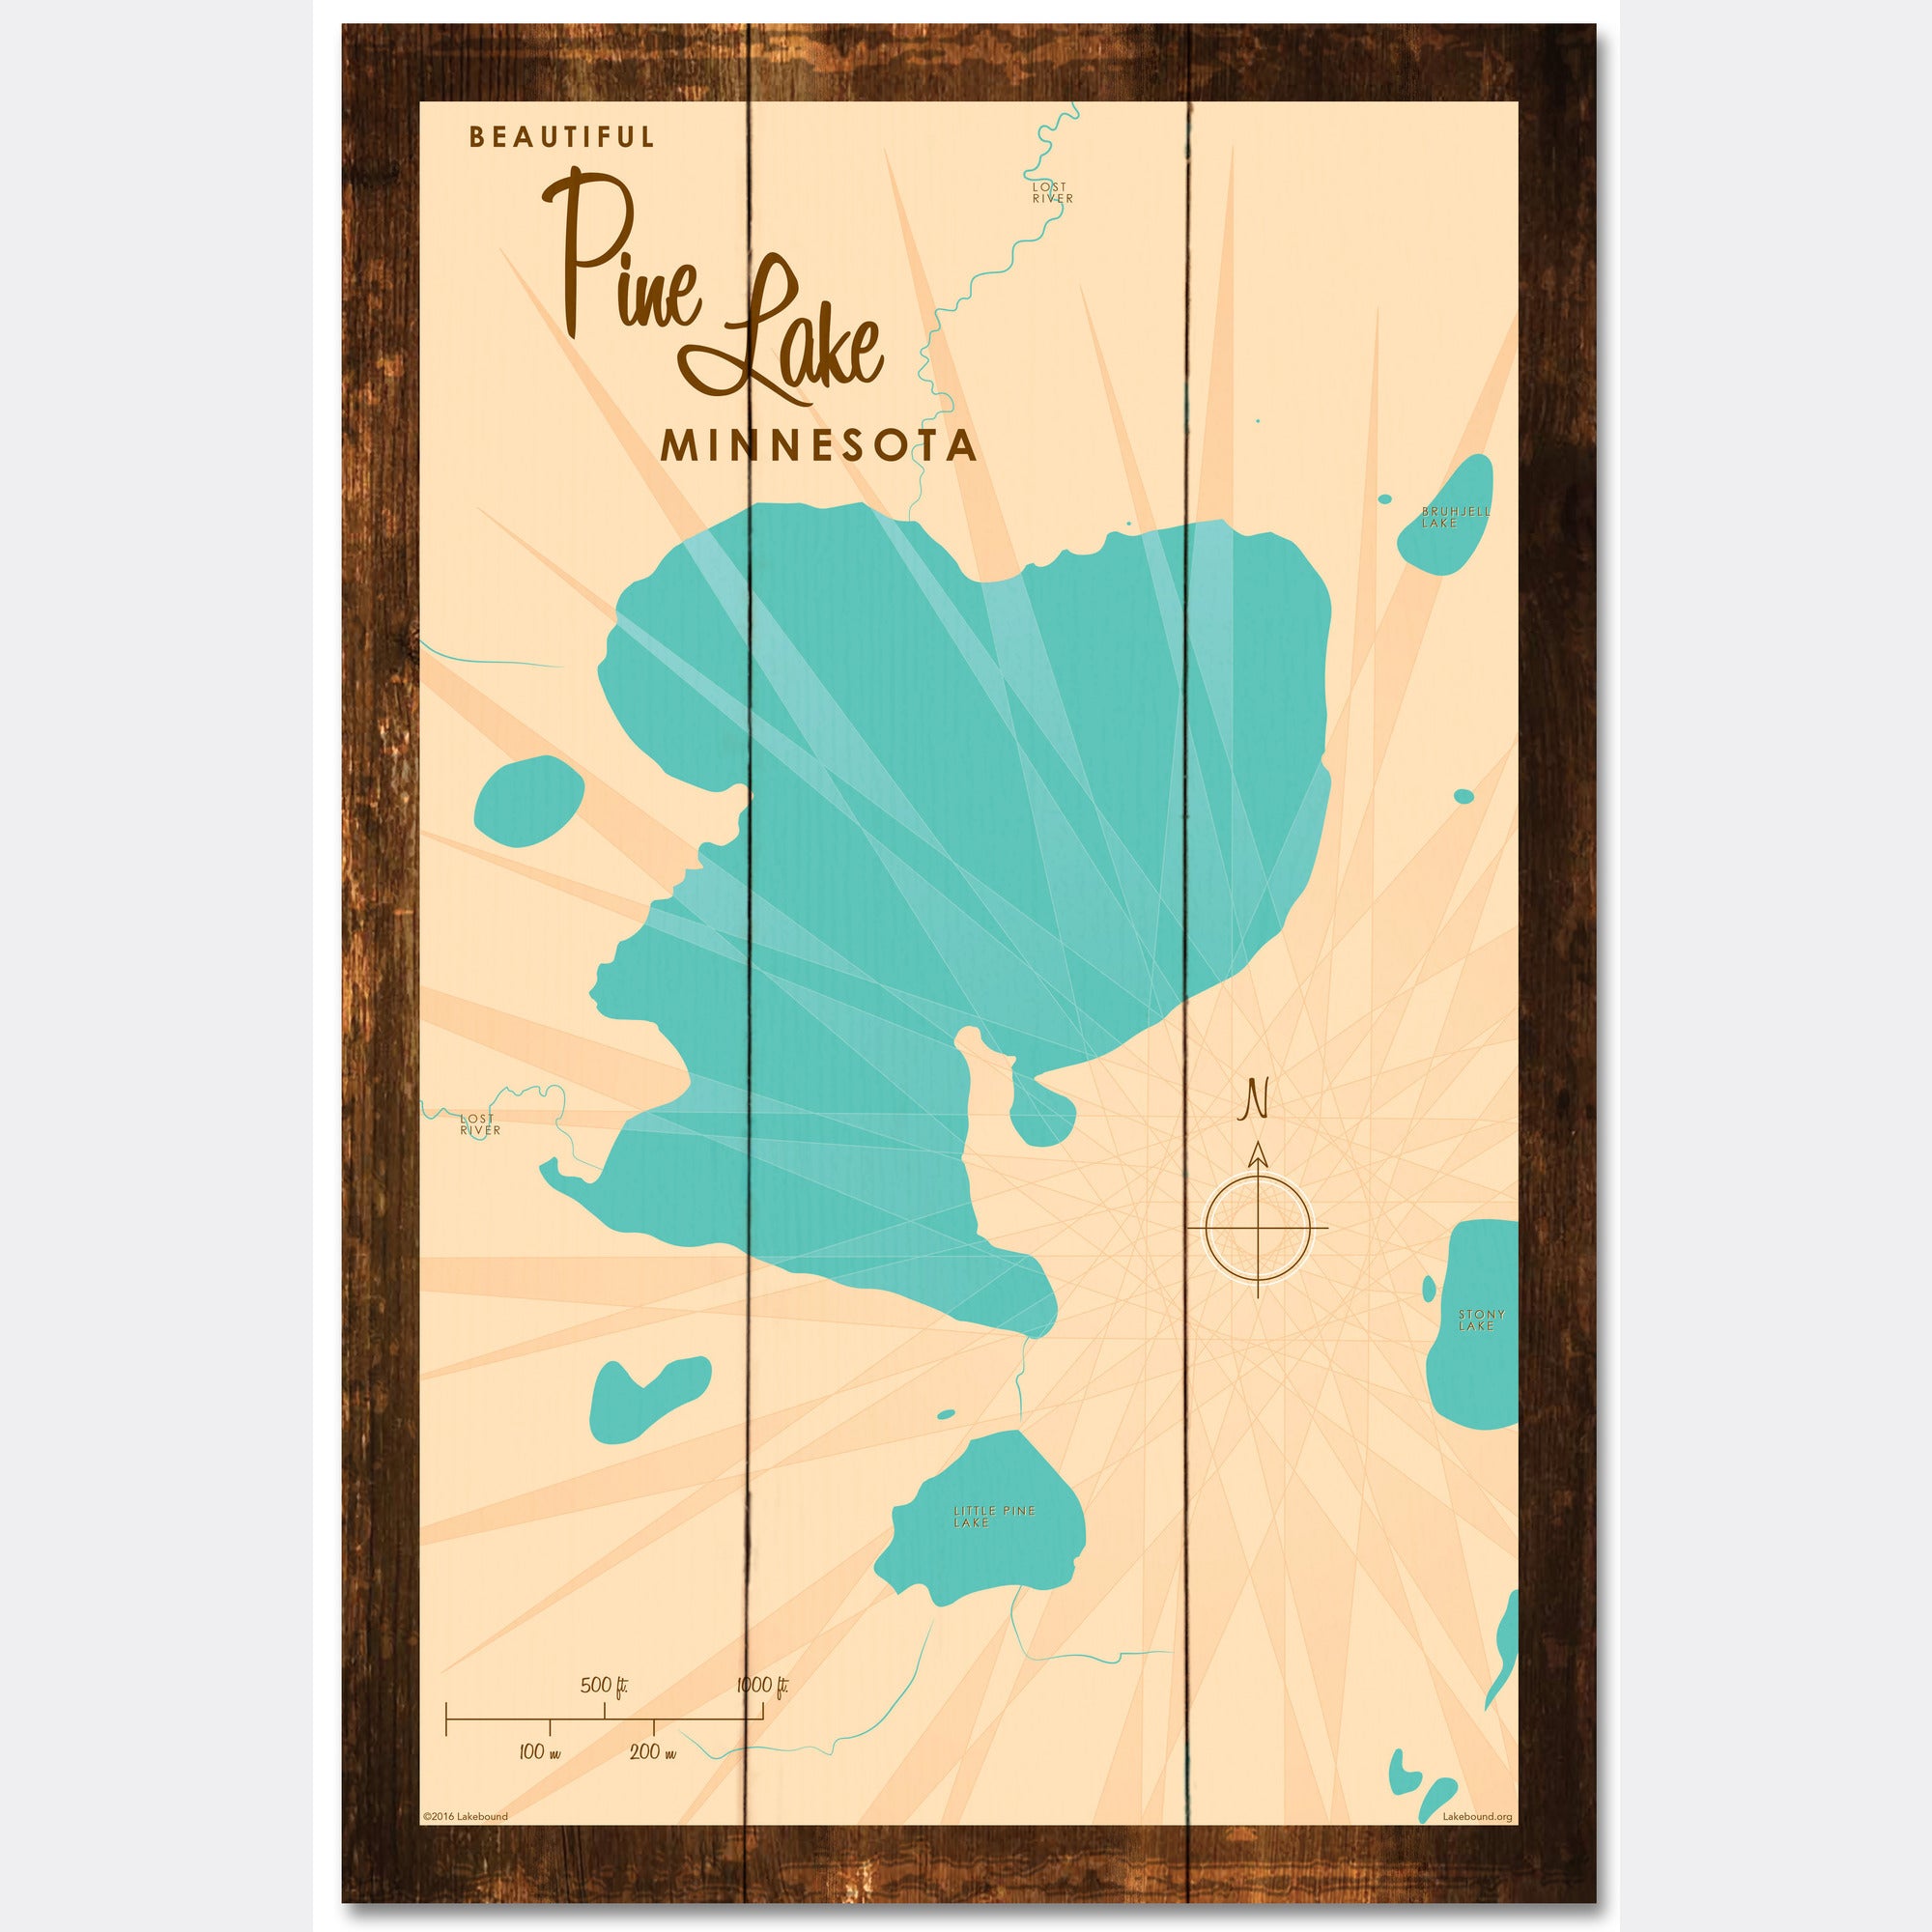 Pine Lake Minnesota, Rustic Wood Sign Map Art